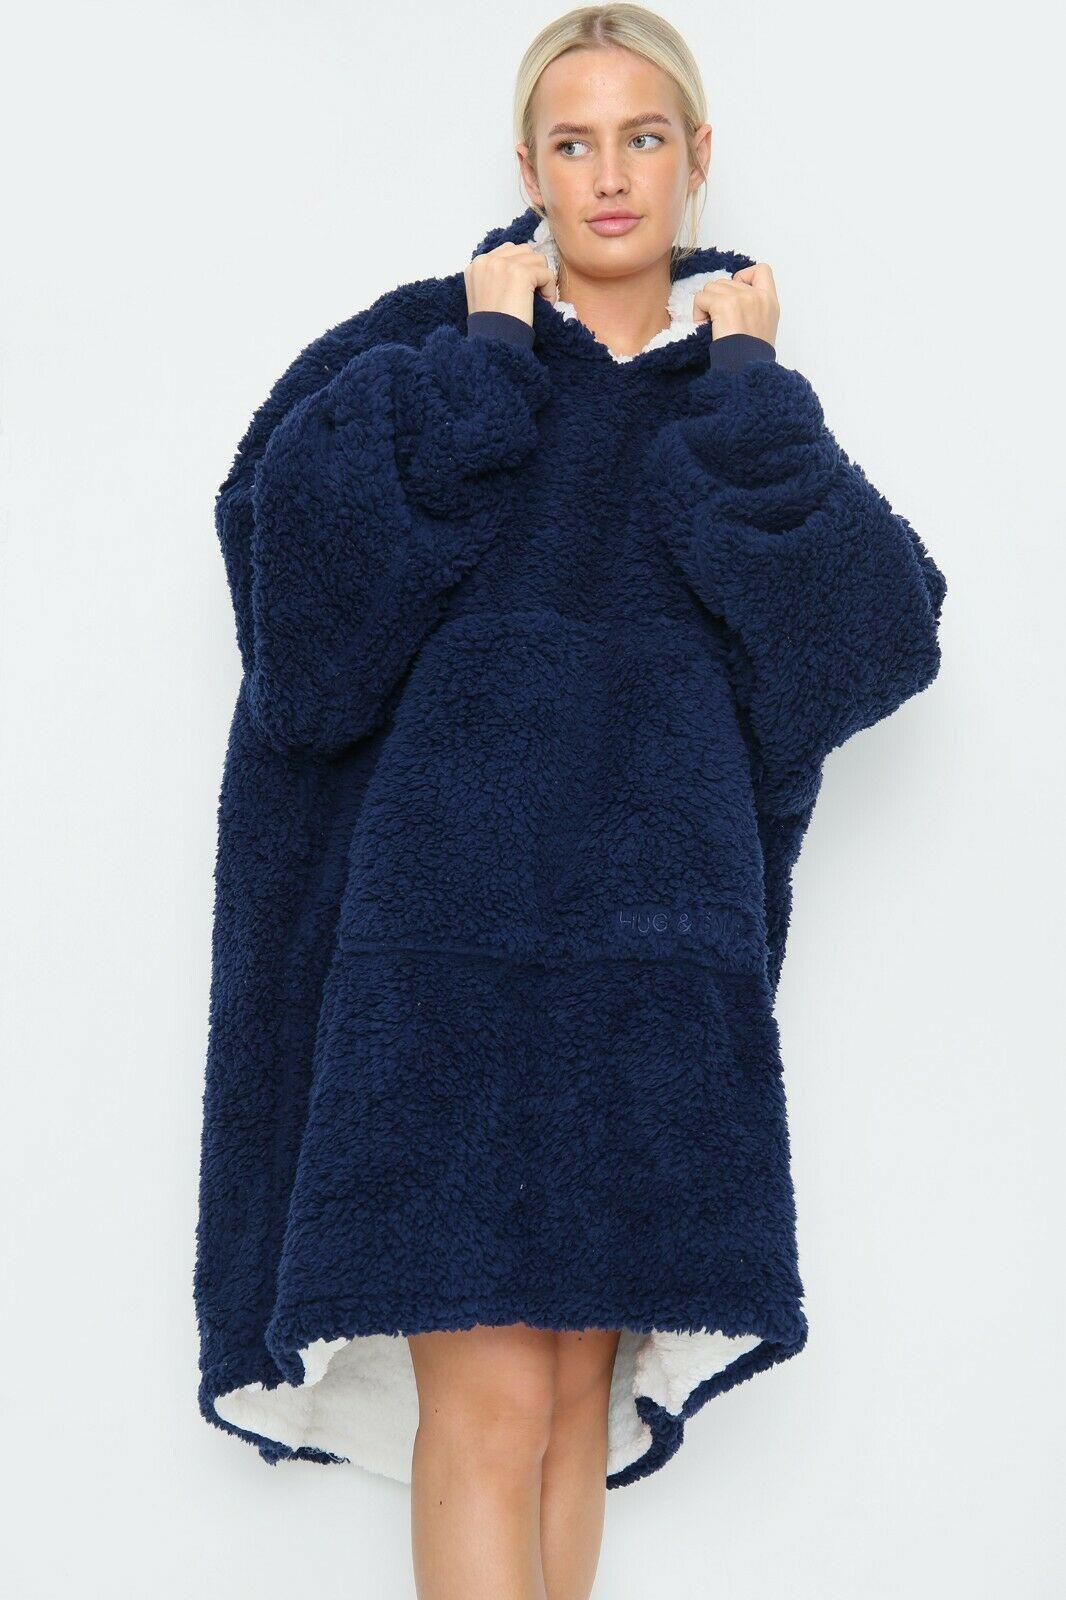 Teddy Sherpa Adults Oversized Hoodie Blanket Sweatshirt - 7 Colours